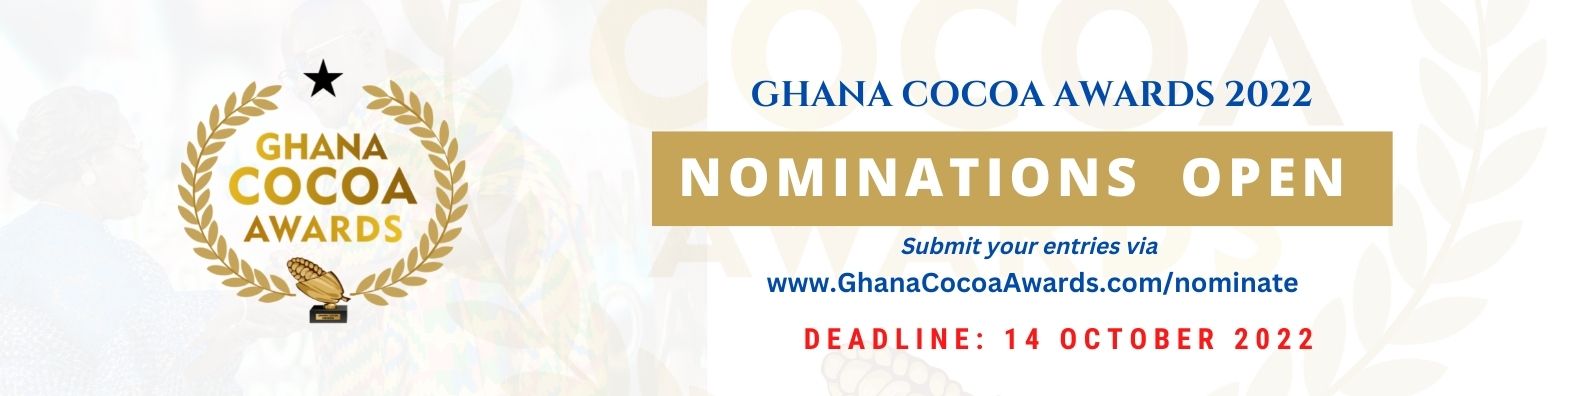 GCA2022 Nominations Banner Ad